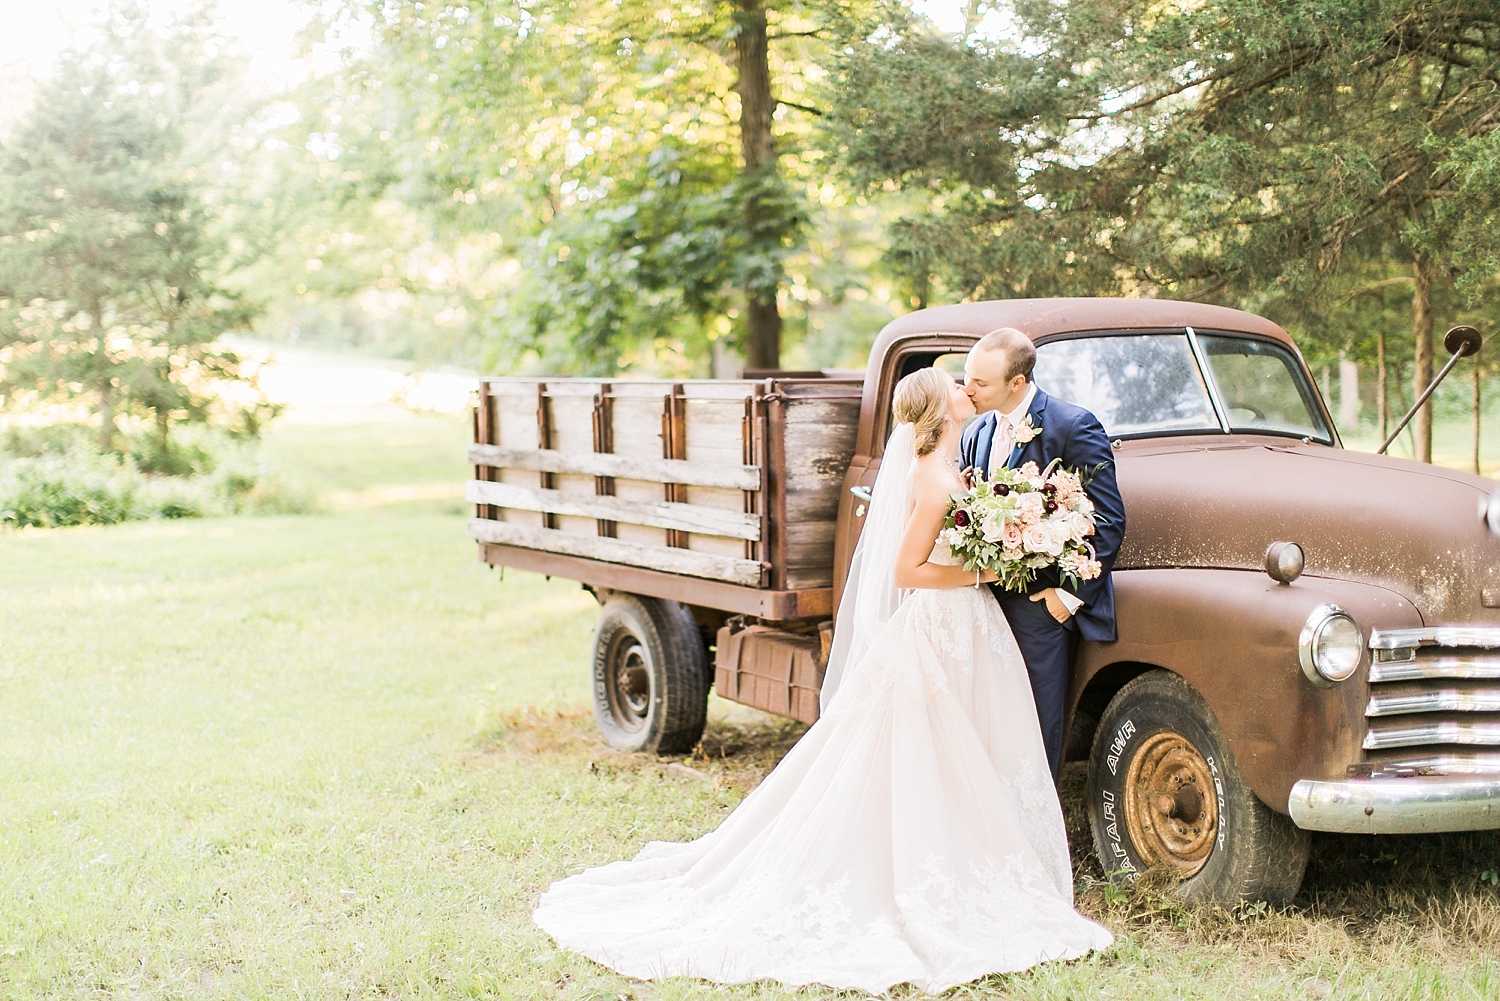 Kempker's Back 40 Wedding, Mid Missouri Wedding Photographer, Missouri Florist, Sugarberry Blooms, Outdoor rustic wedding, Jefferson City Missouri Wedding, Missouri Wedding Photography